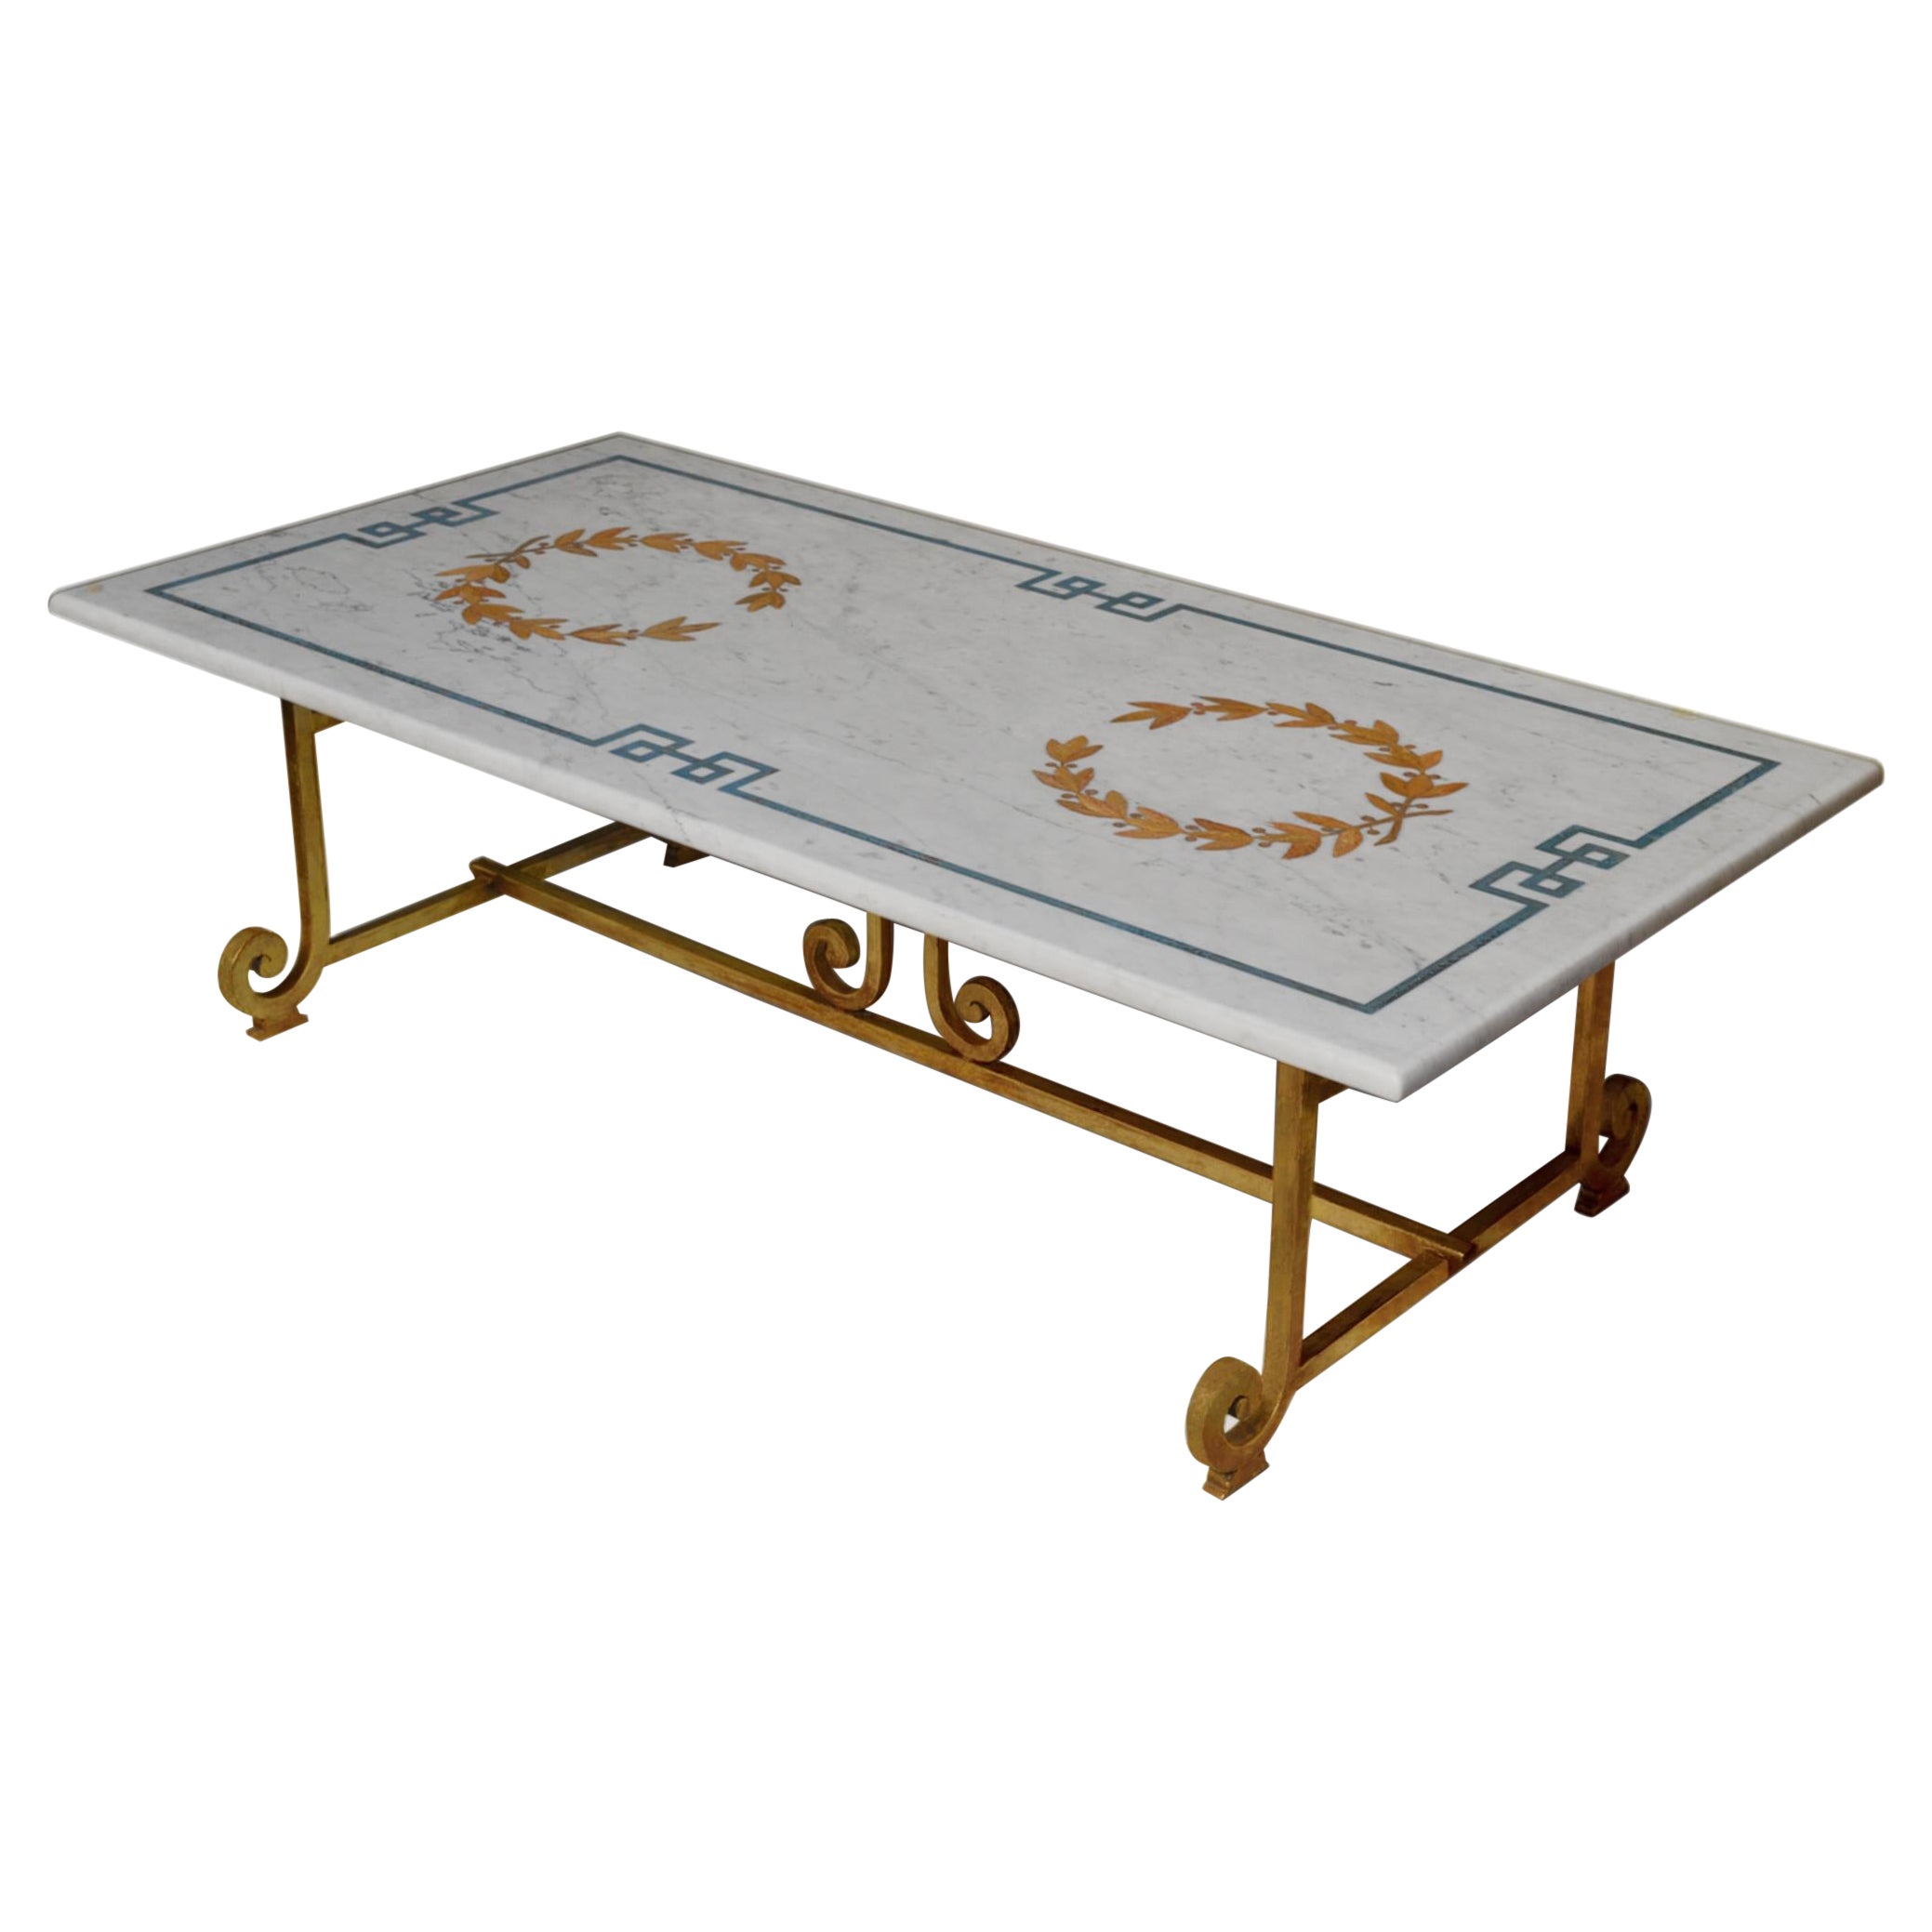 Tavolino marmo bianco intarsiato et base en ferro battuto fatto a mano en Italie